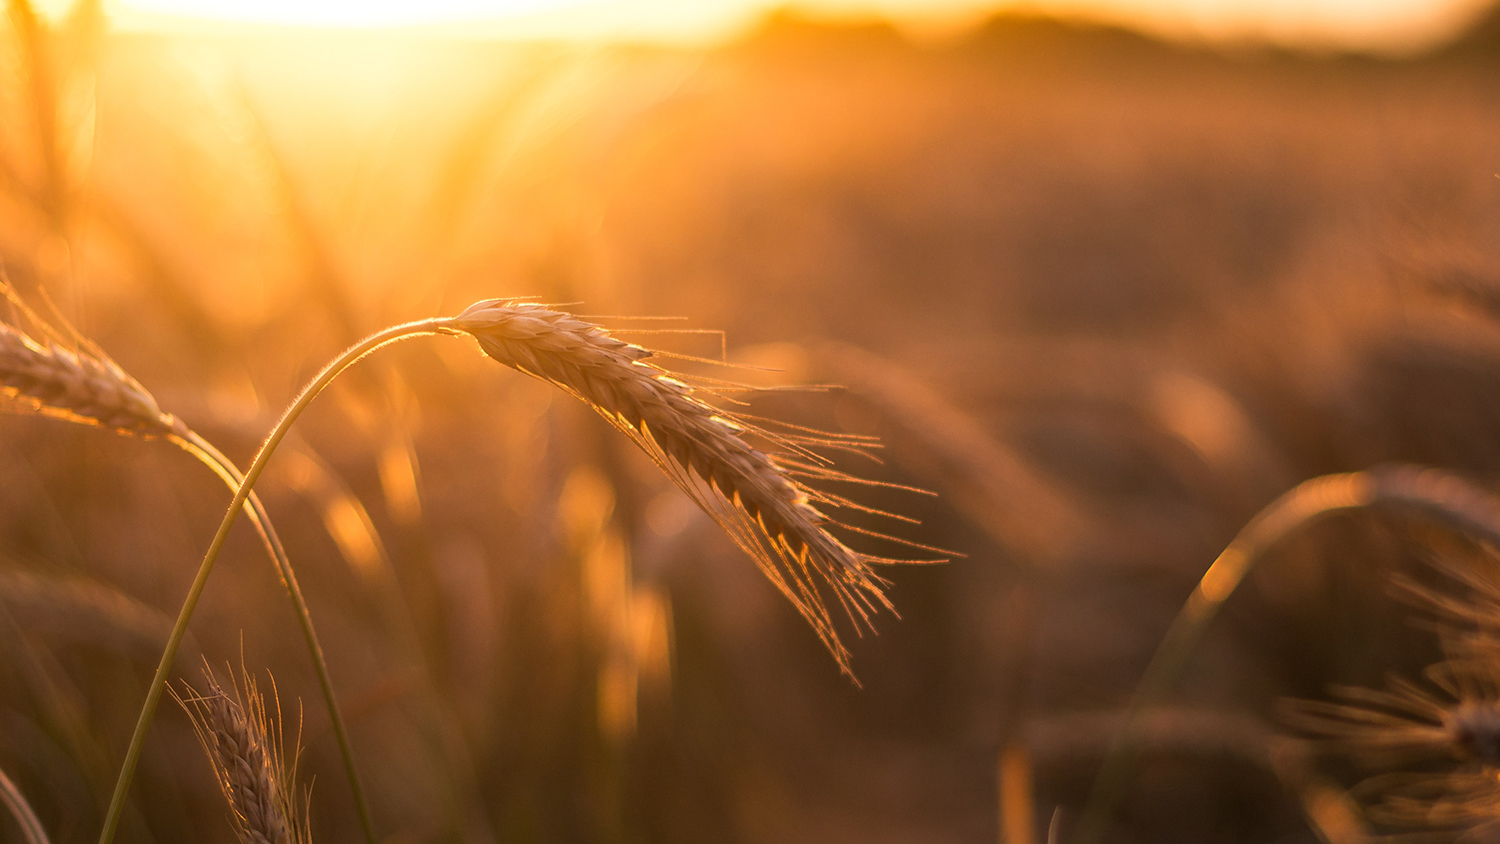 Wheat field in the sunshine